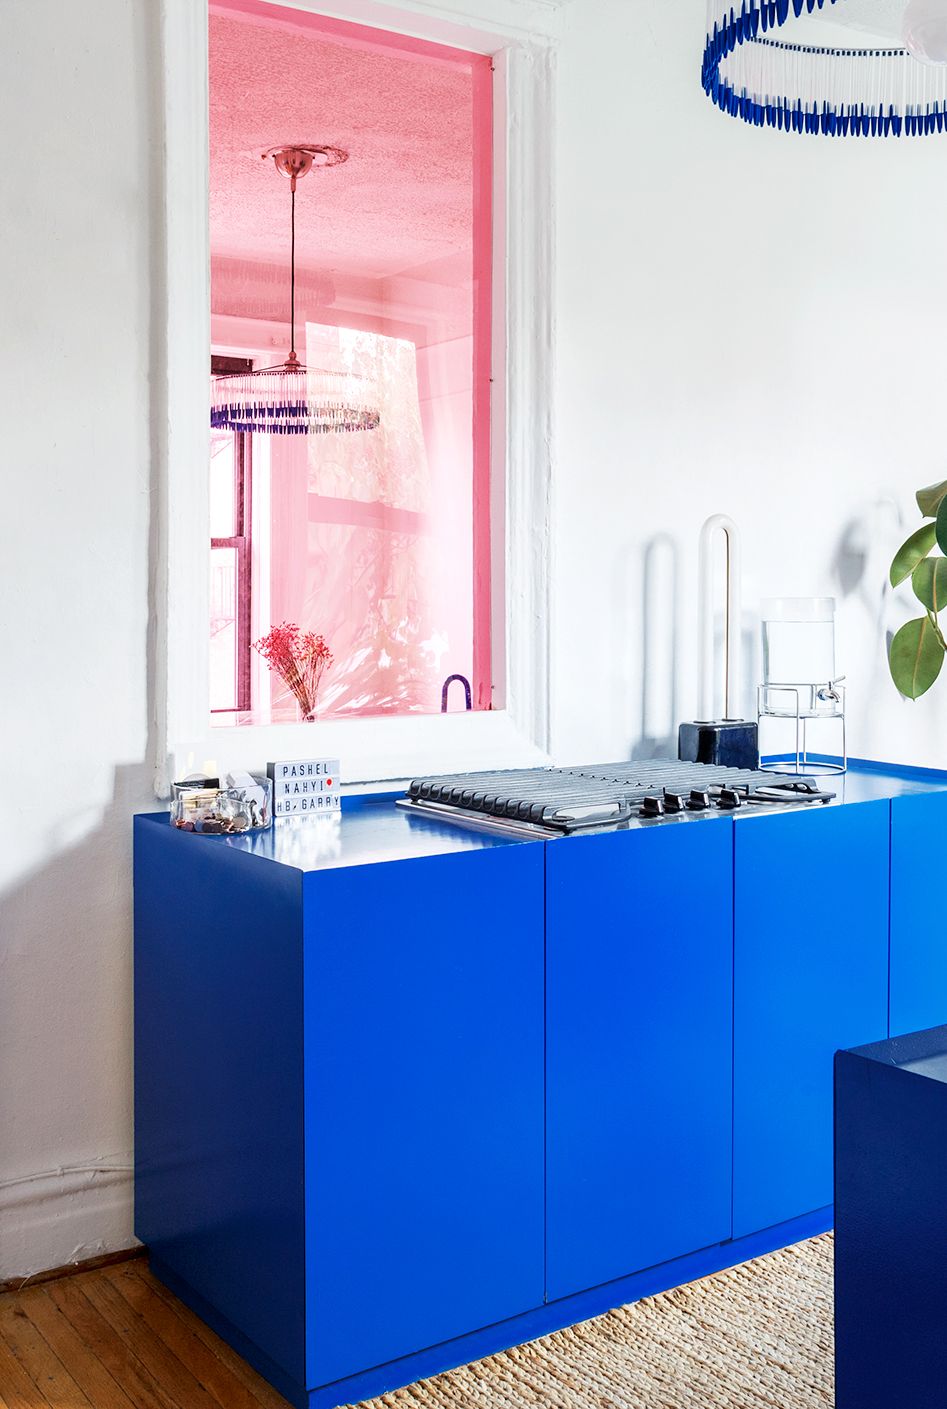 blue kitchen with pink interior glass window